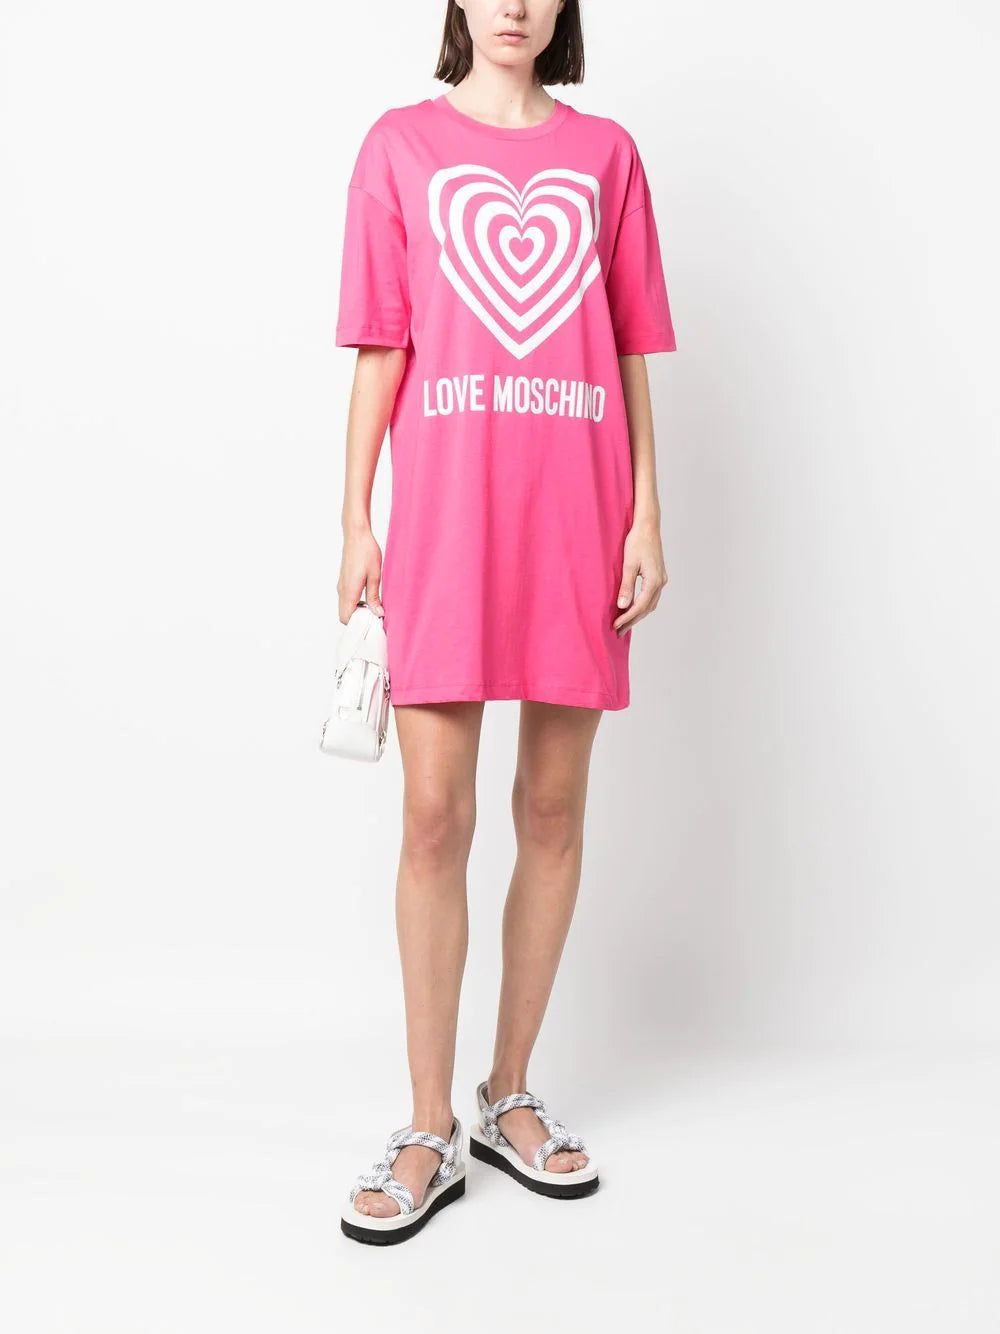 Abito Modello T-Shirt con Logo Love Moschino / Rosa - Ideal Moda